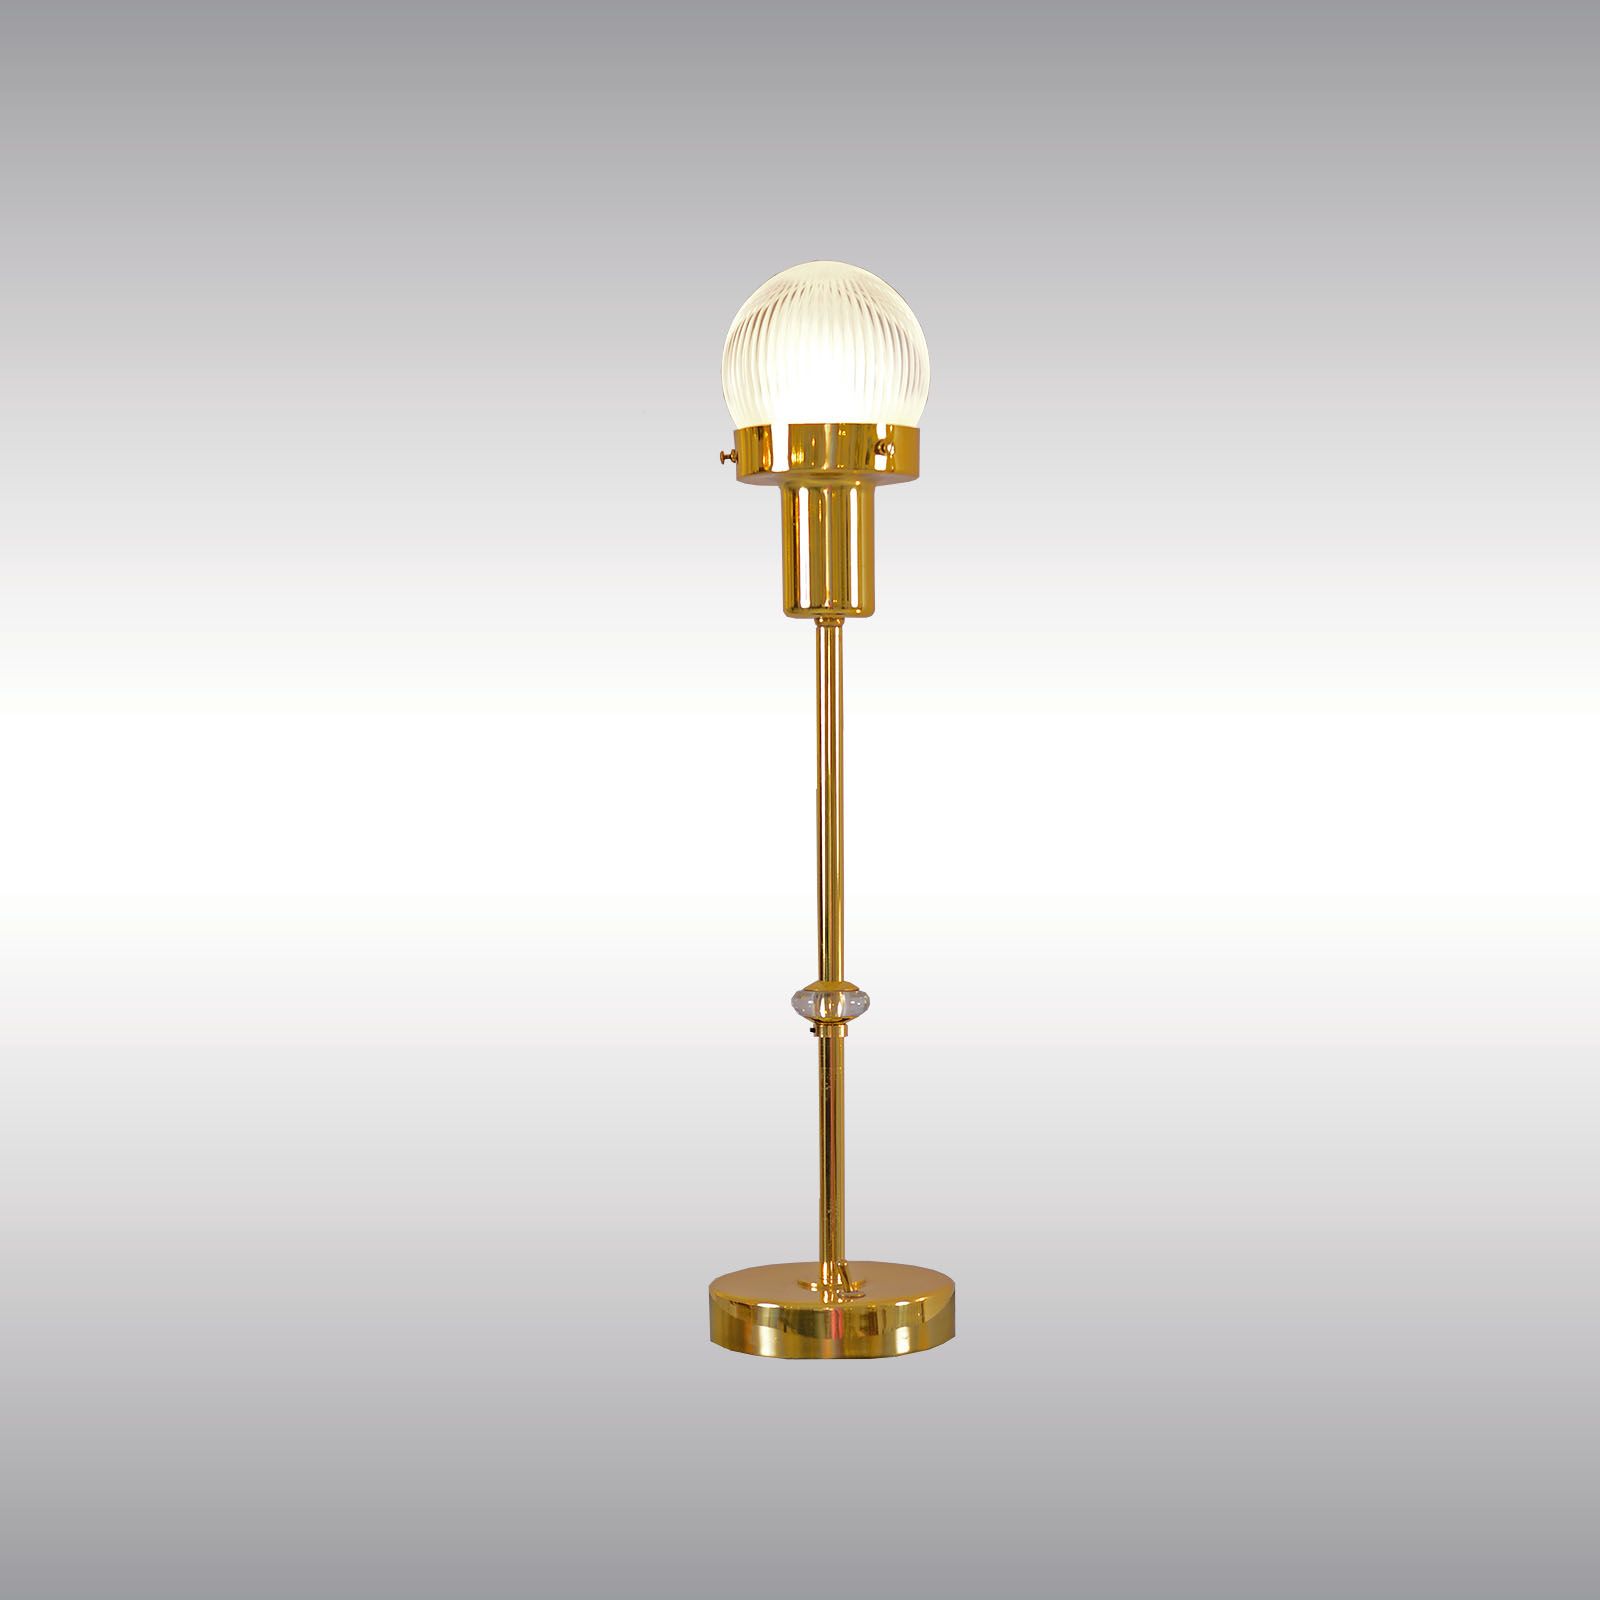 WOKA LAMPS VIENNA - OrderNr.: 21106|Tick - Design: WOKA